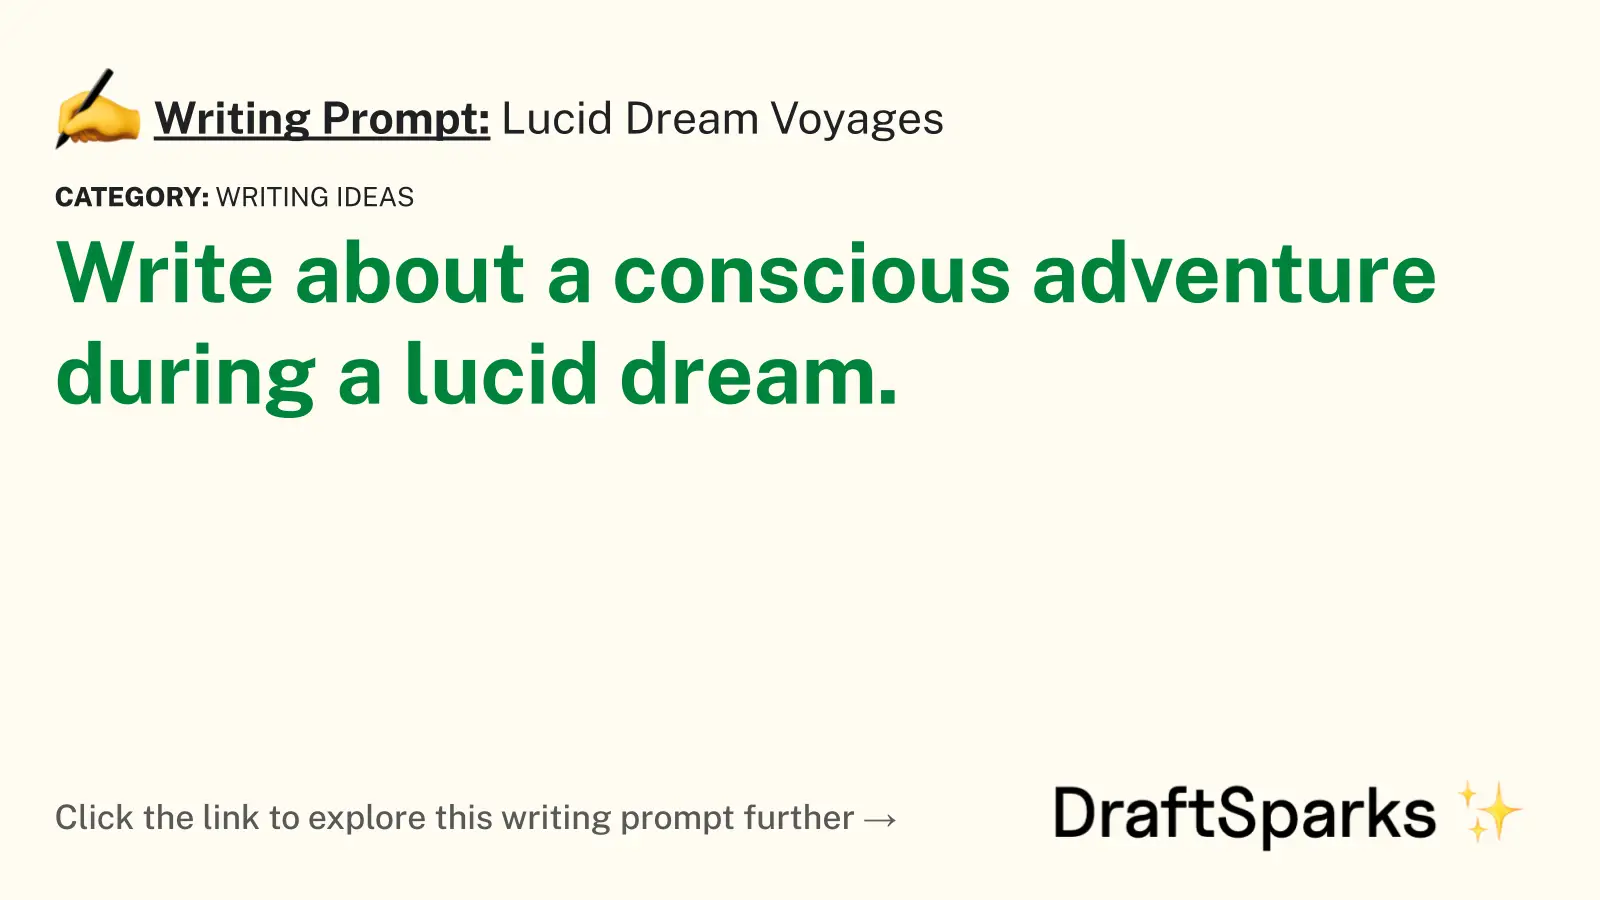 Lucid Dream Voyages